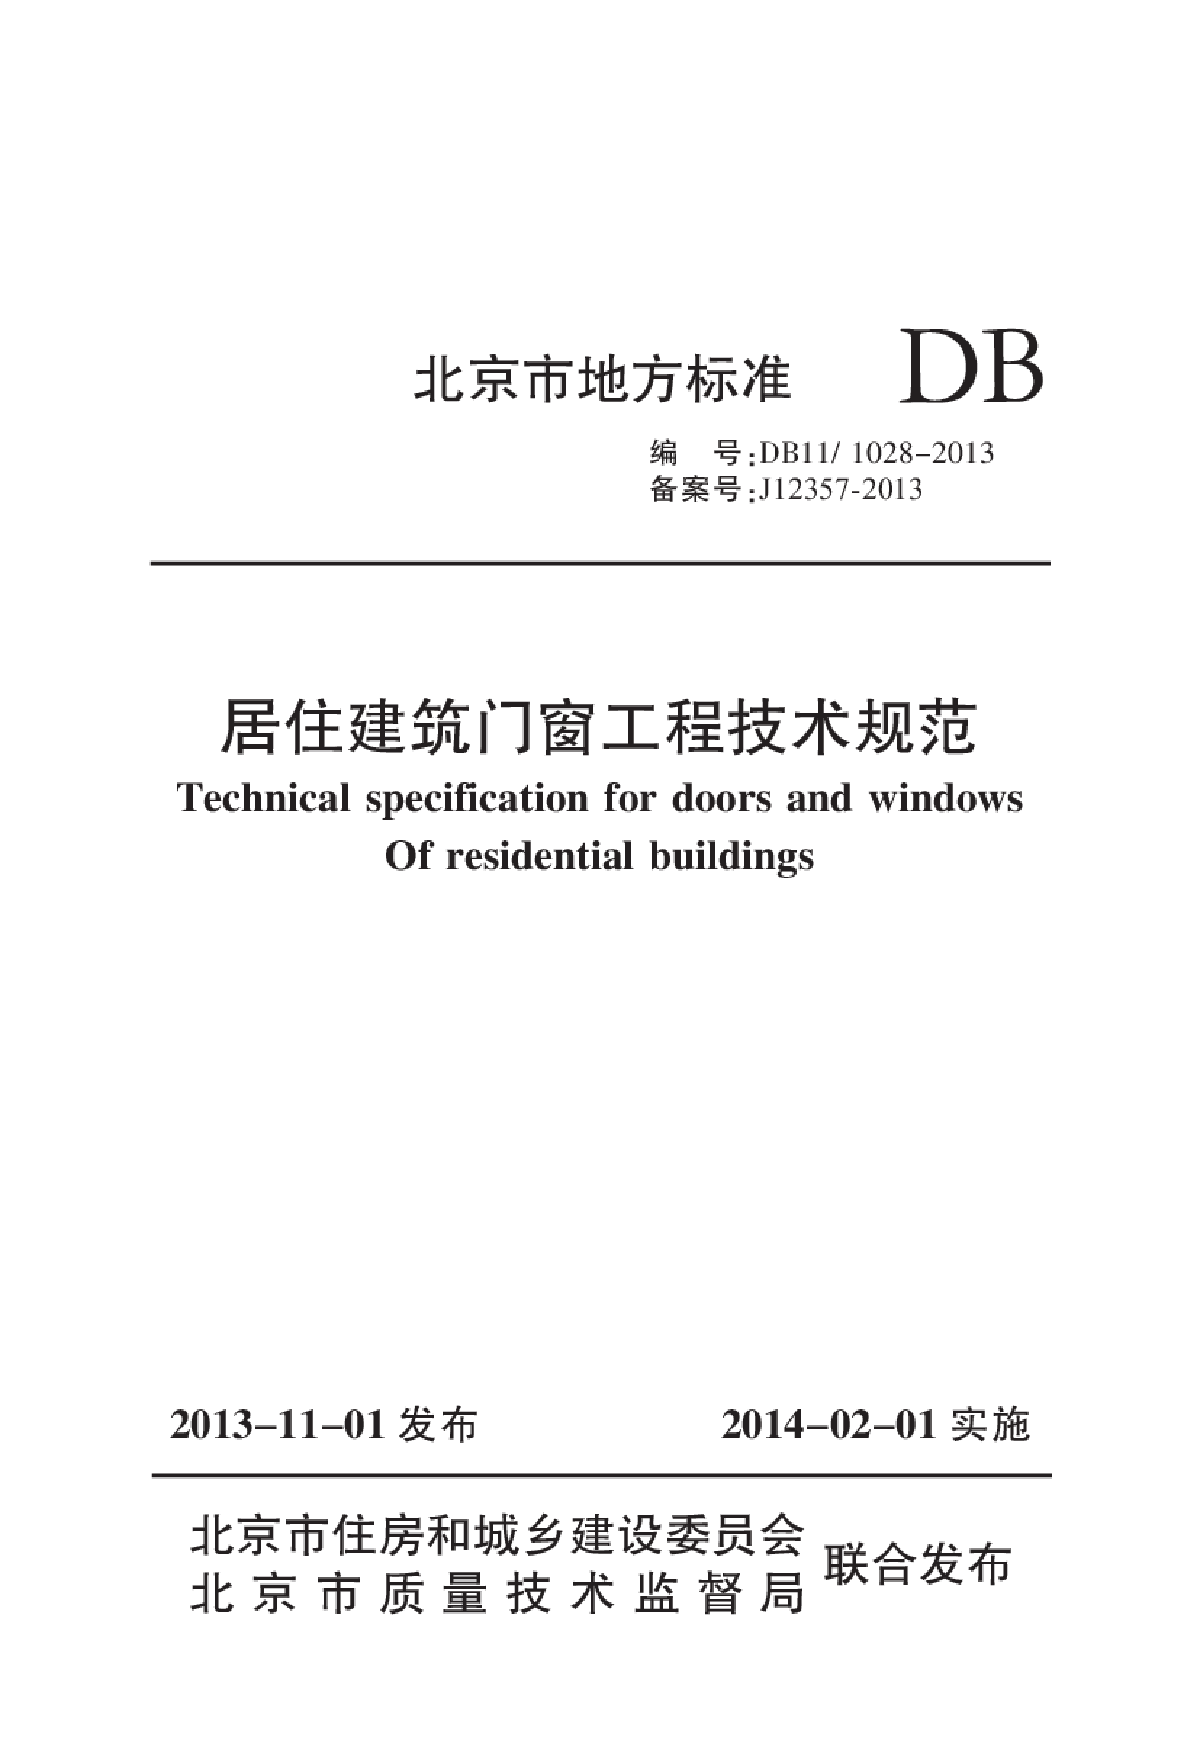 DB111028-2013居住建筑门窗工程技术规范-图一